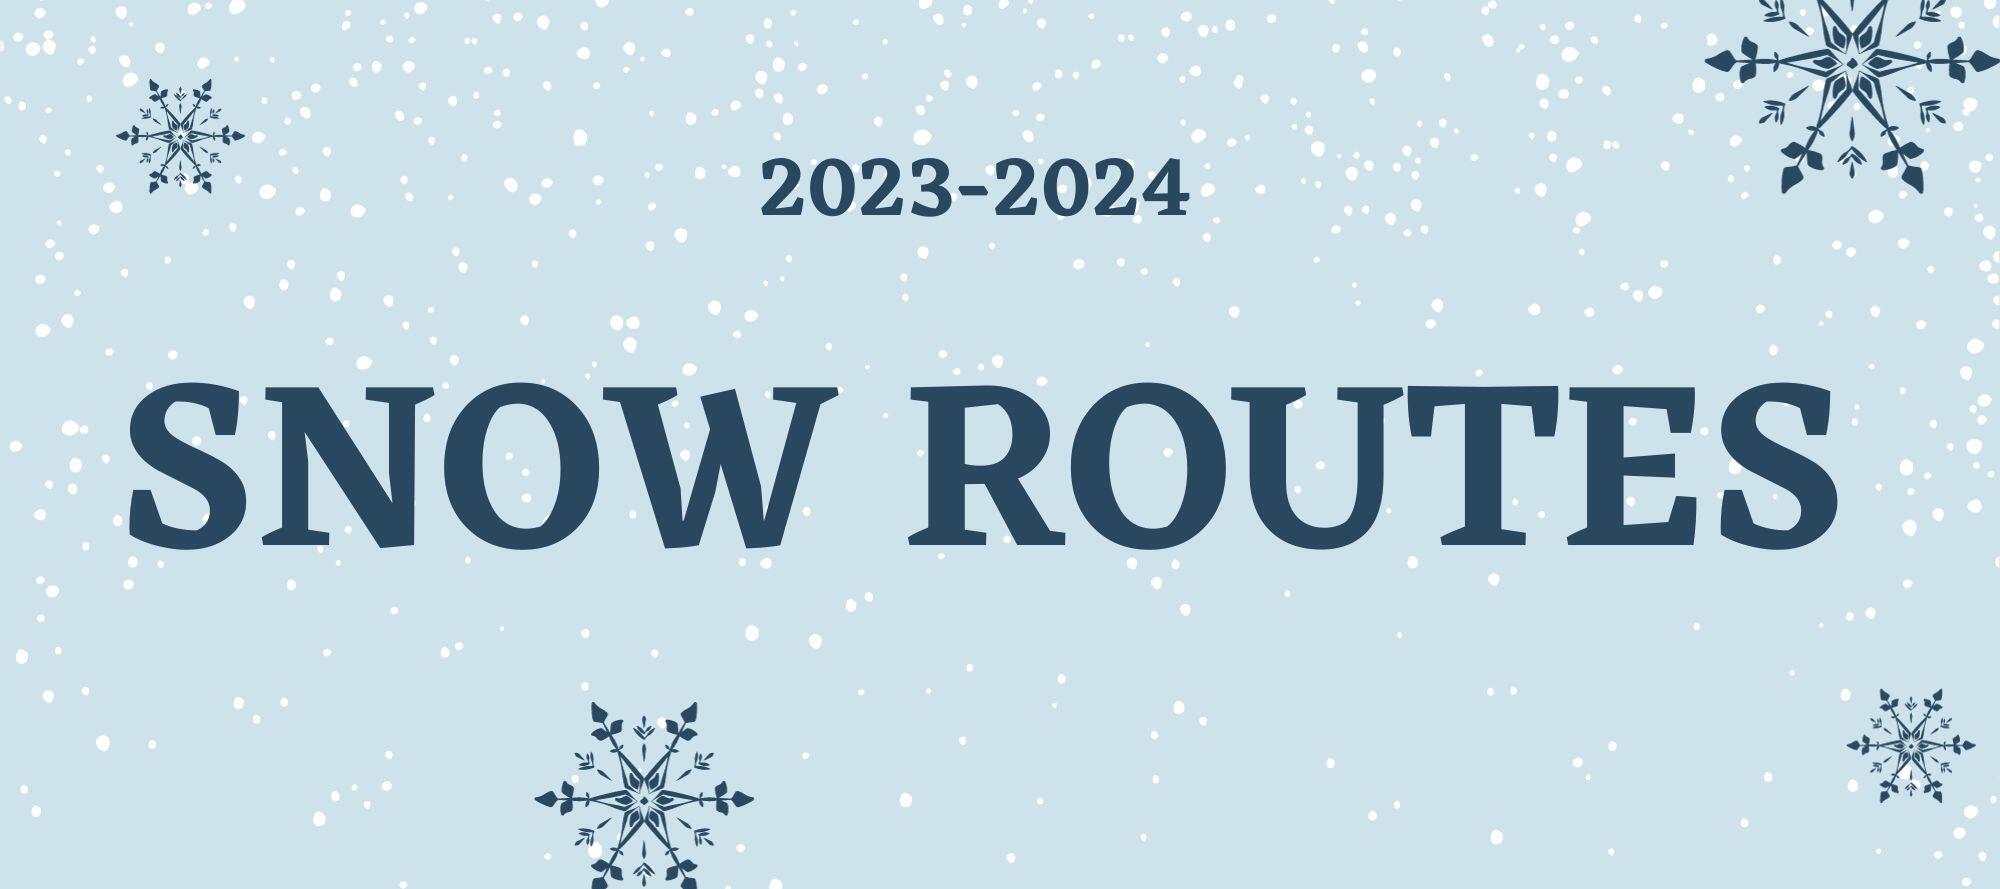 Snow Routes for the 2023-24 Winter Season